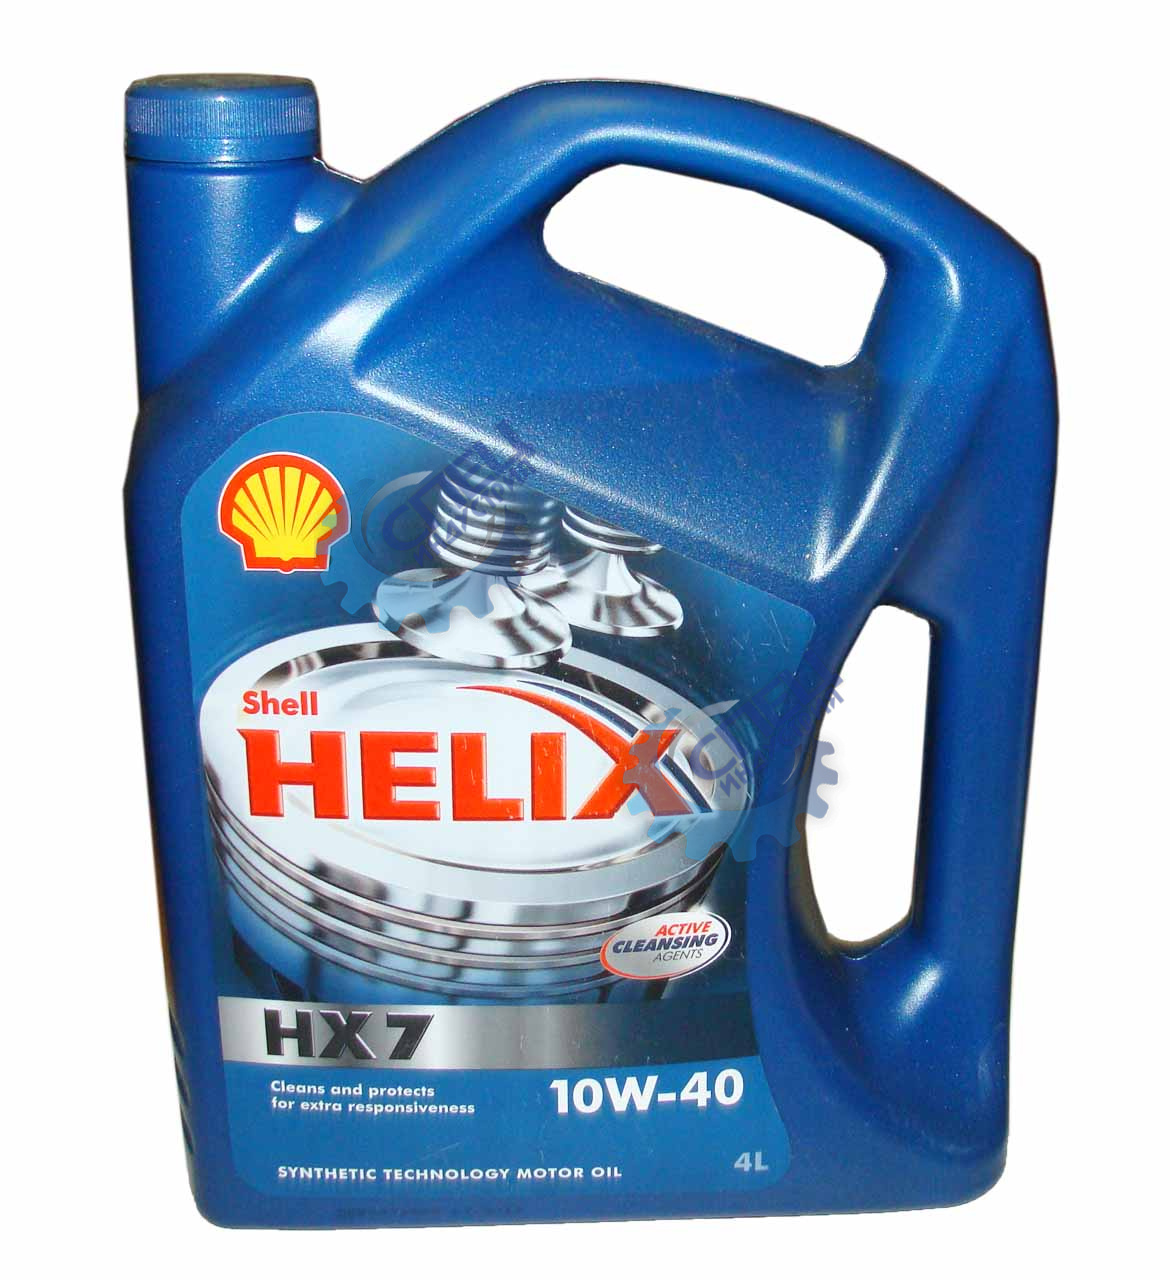 Масло hx7 10w 40. Shell hx7 Diesel. Shell HX 7 10w 40 Active Cleansing. Shell Helix HX 7 Diesel 10 40. Shell Helix 10w 40 Diesel.